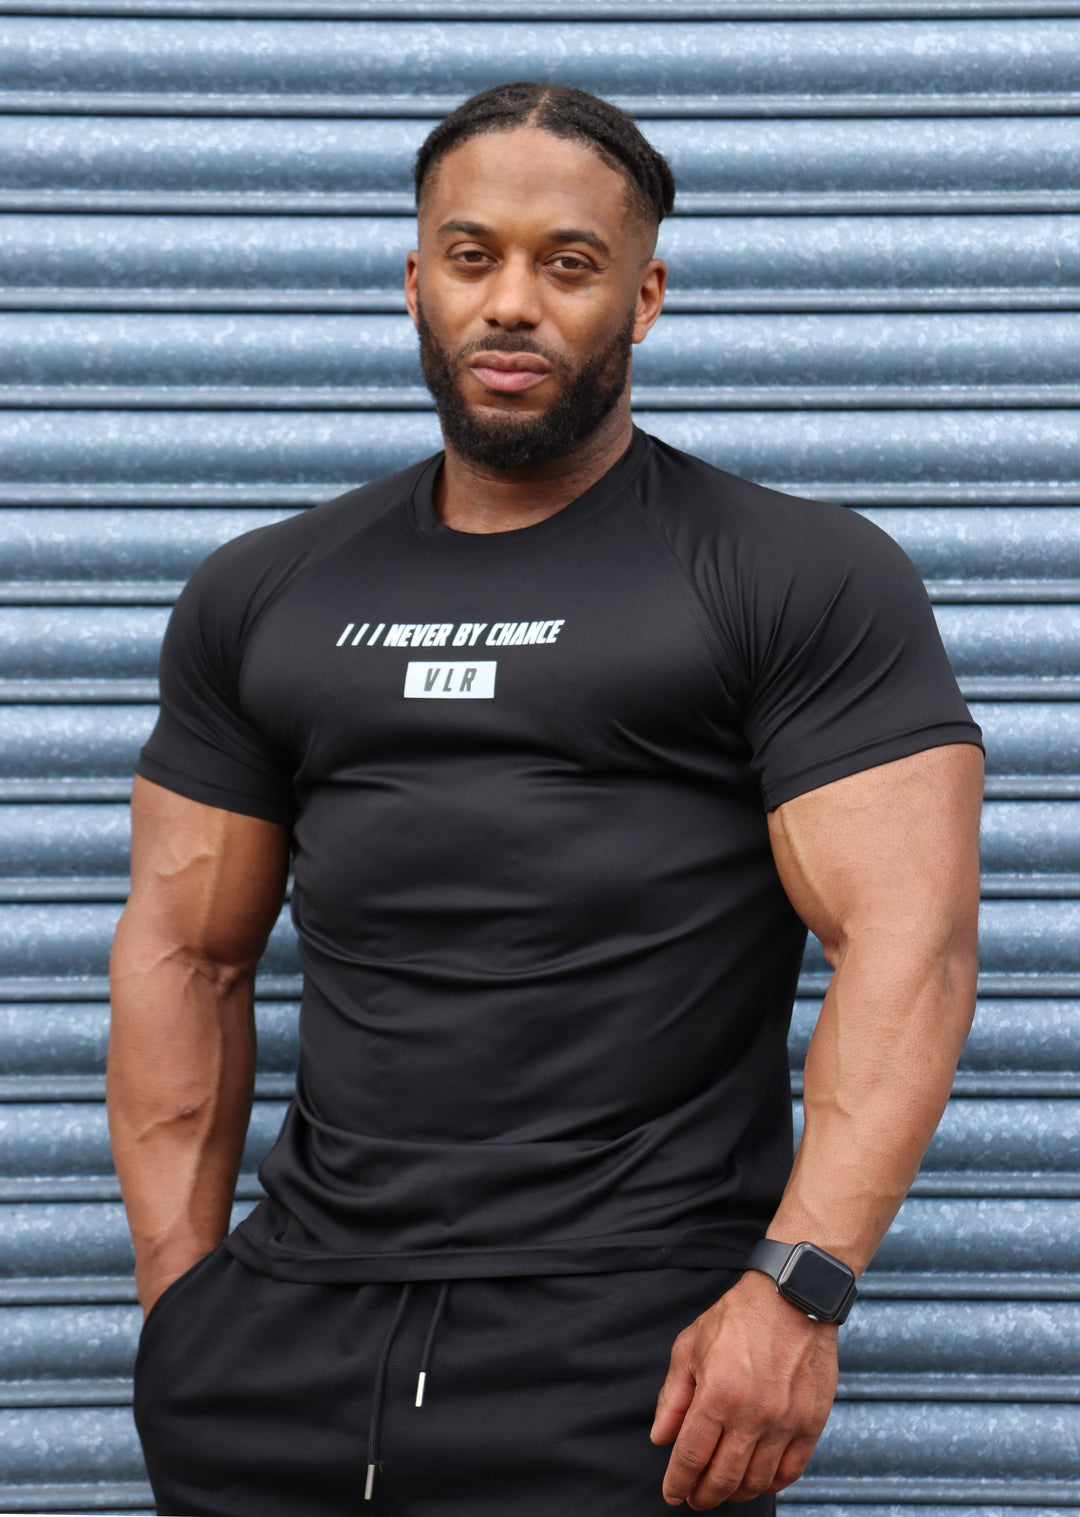 bodybuilder in tech training shirt